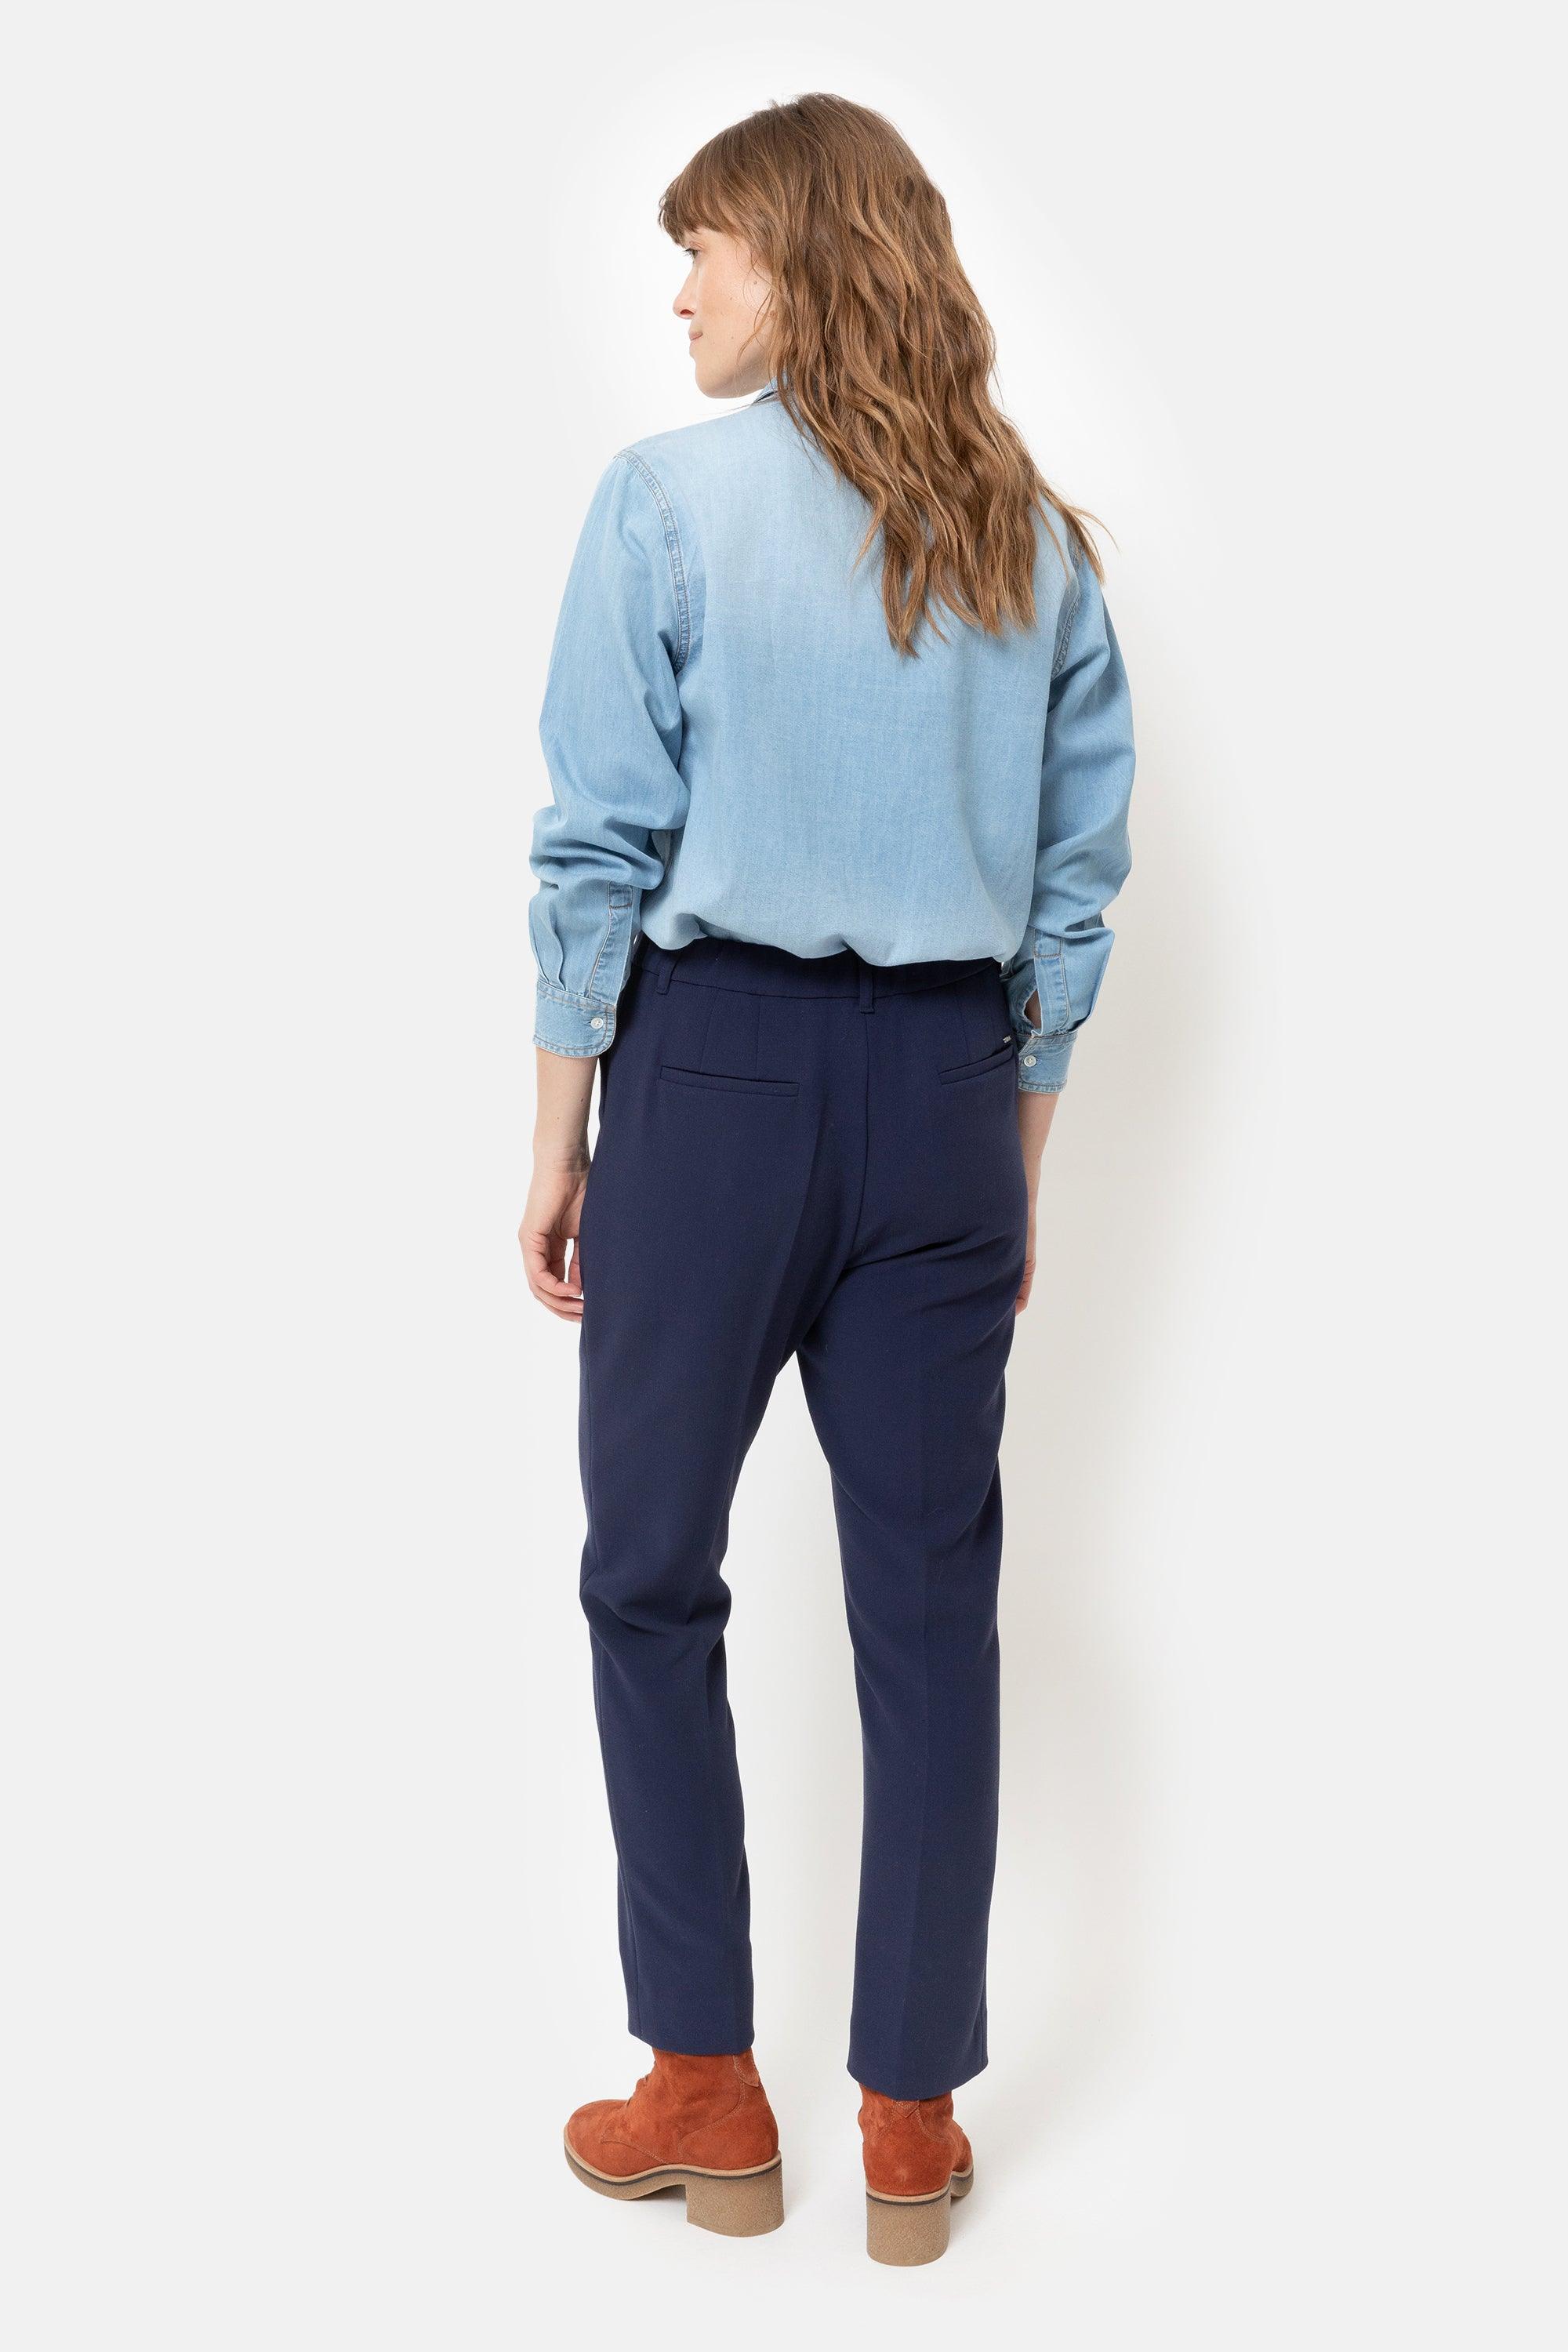 Bloes Blauw Terre Bleue ( Jacey/525 ) - Delaere Womenswear